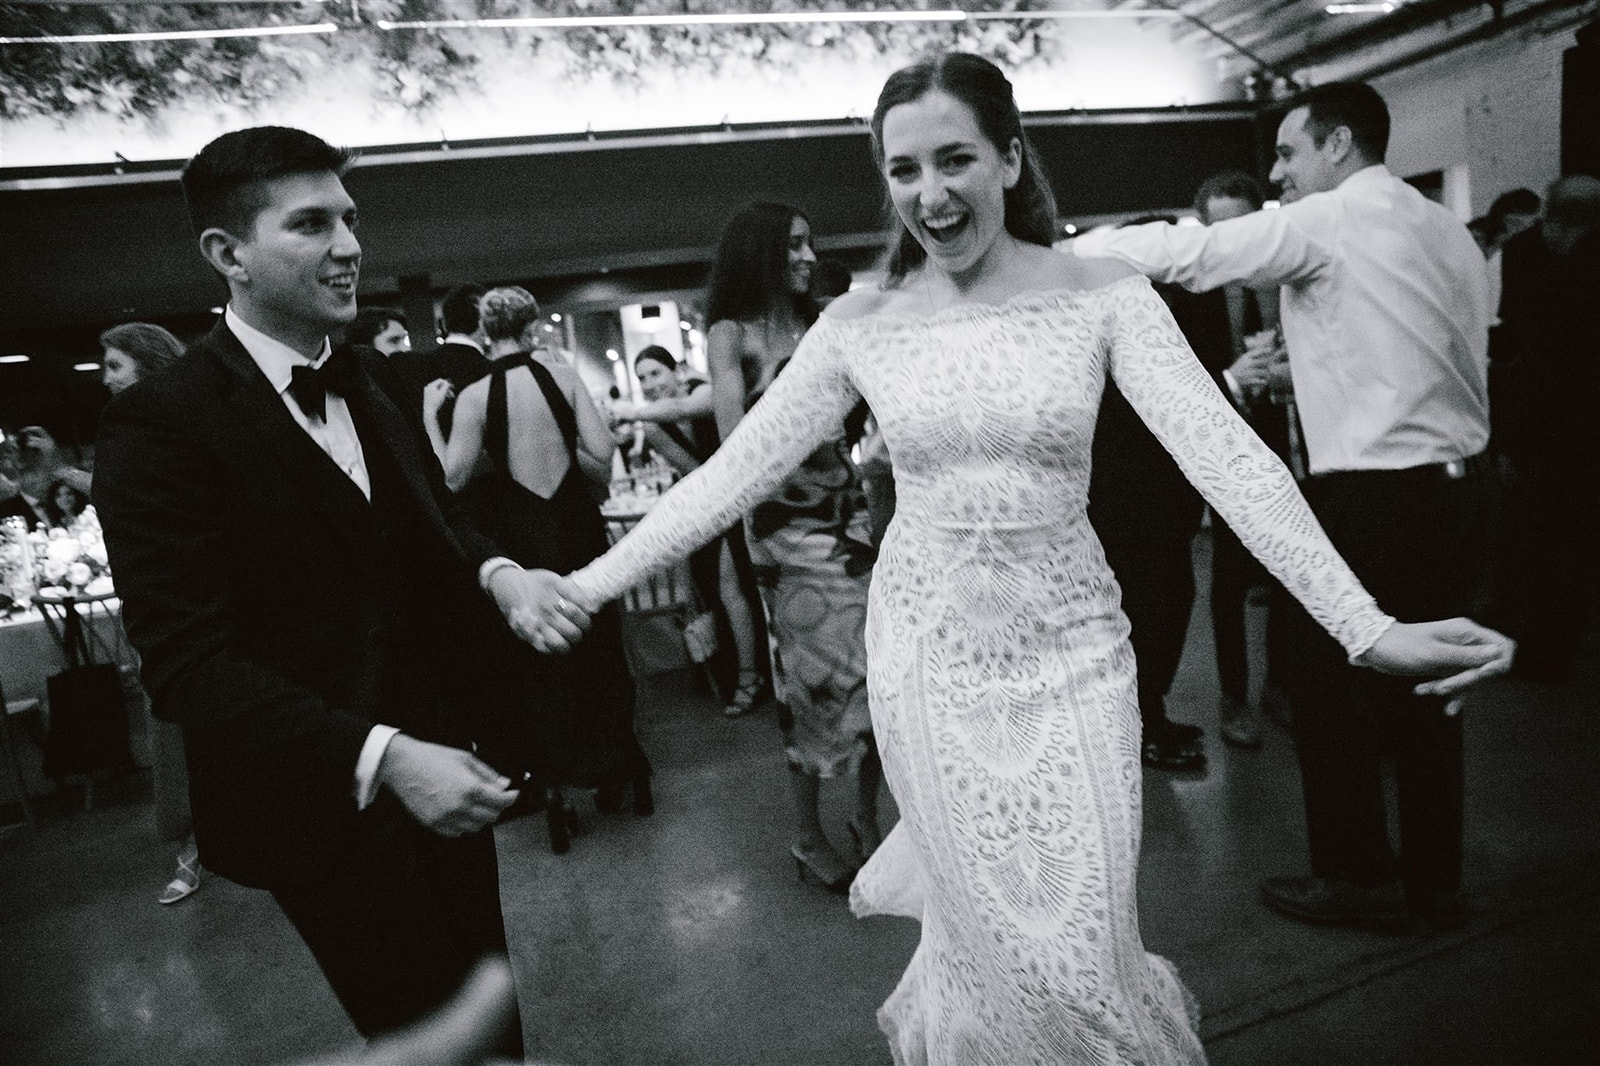 Bride and groom dancing joyfully at Walden Chicago wedding celebration.